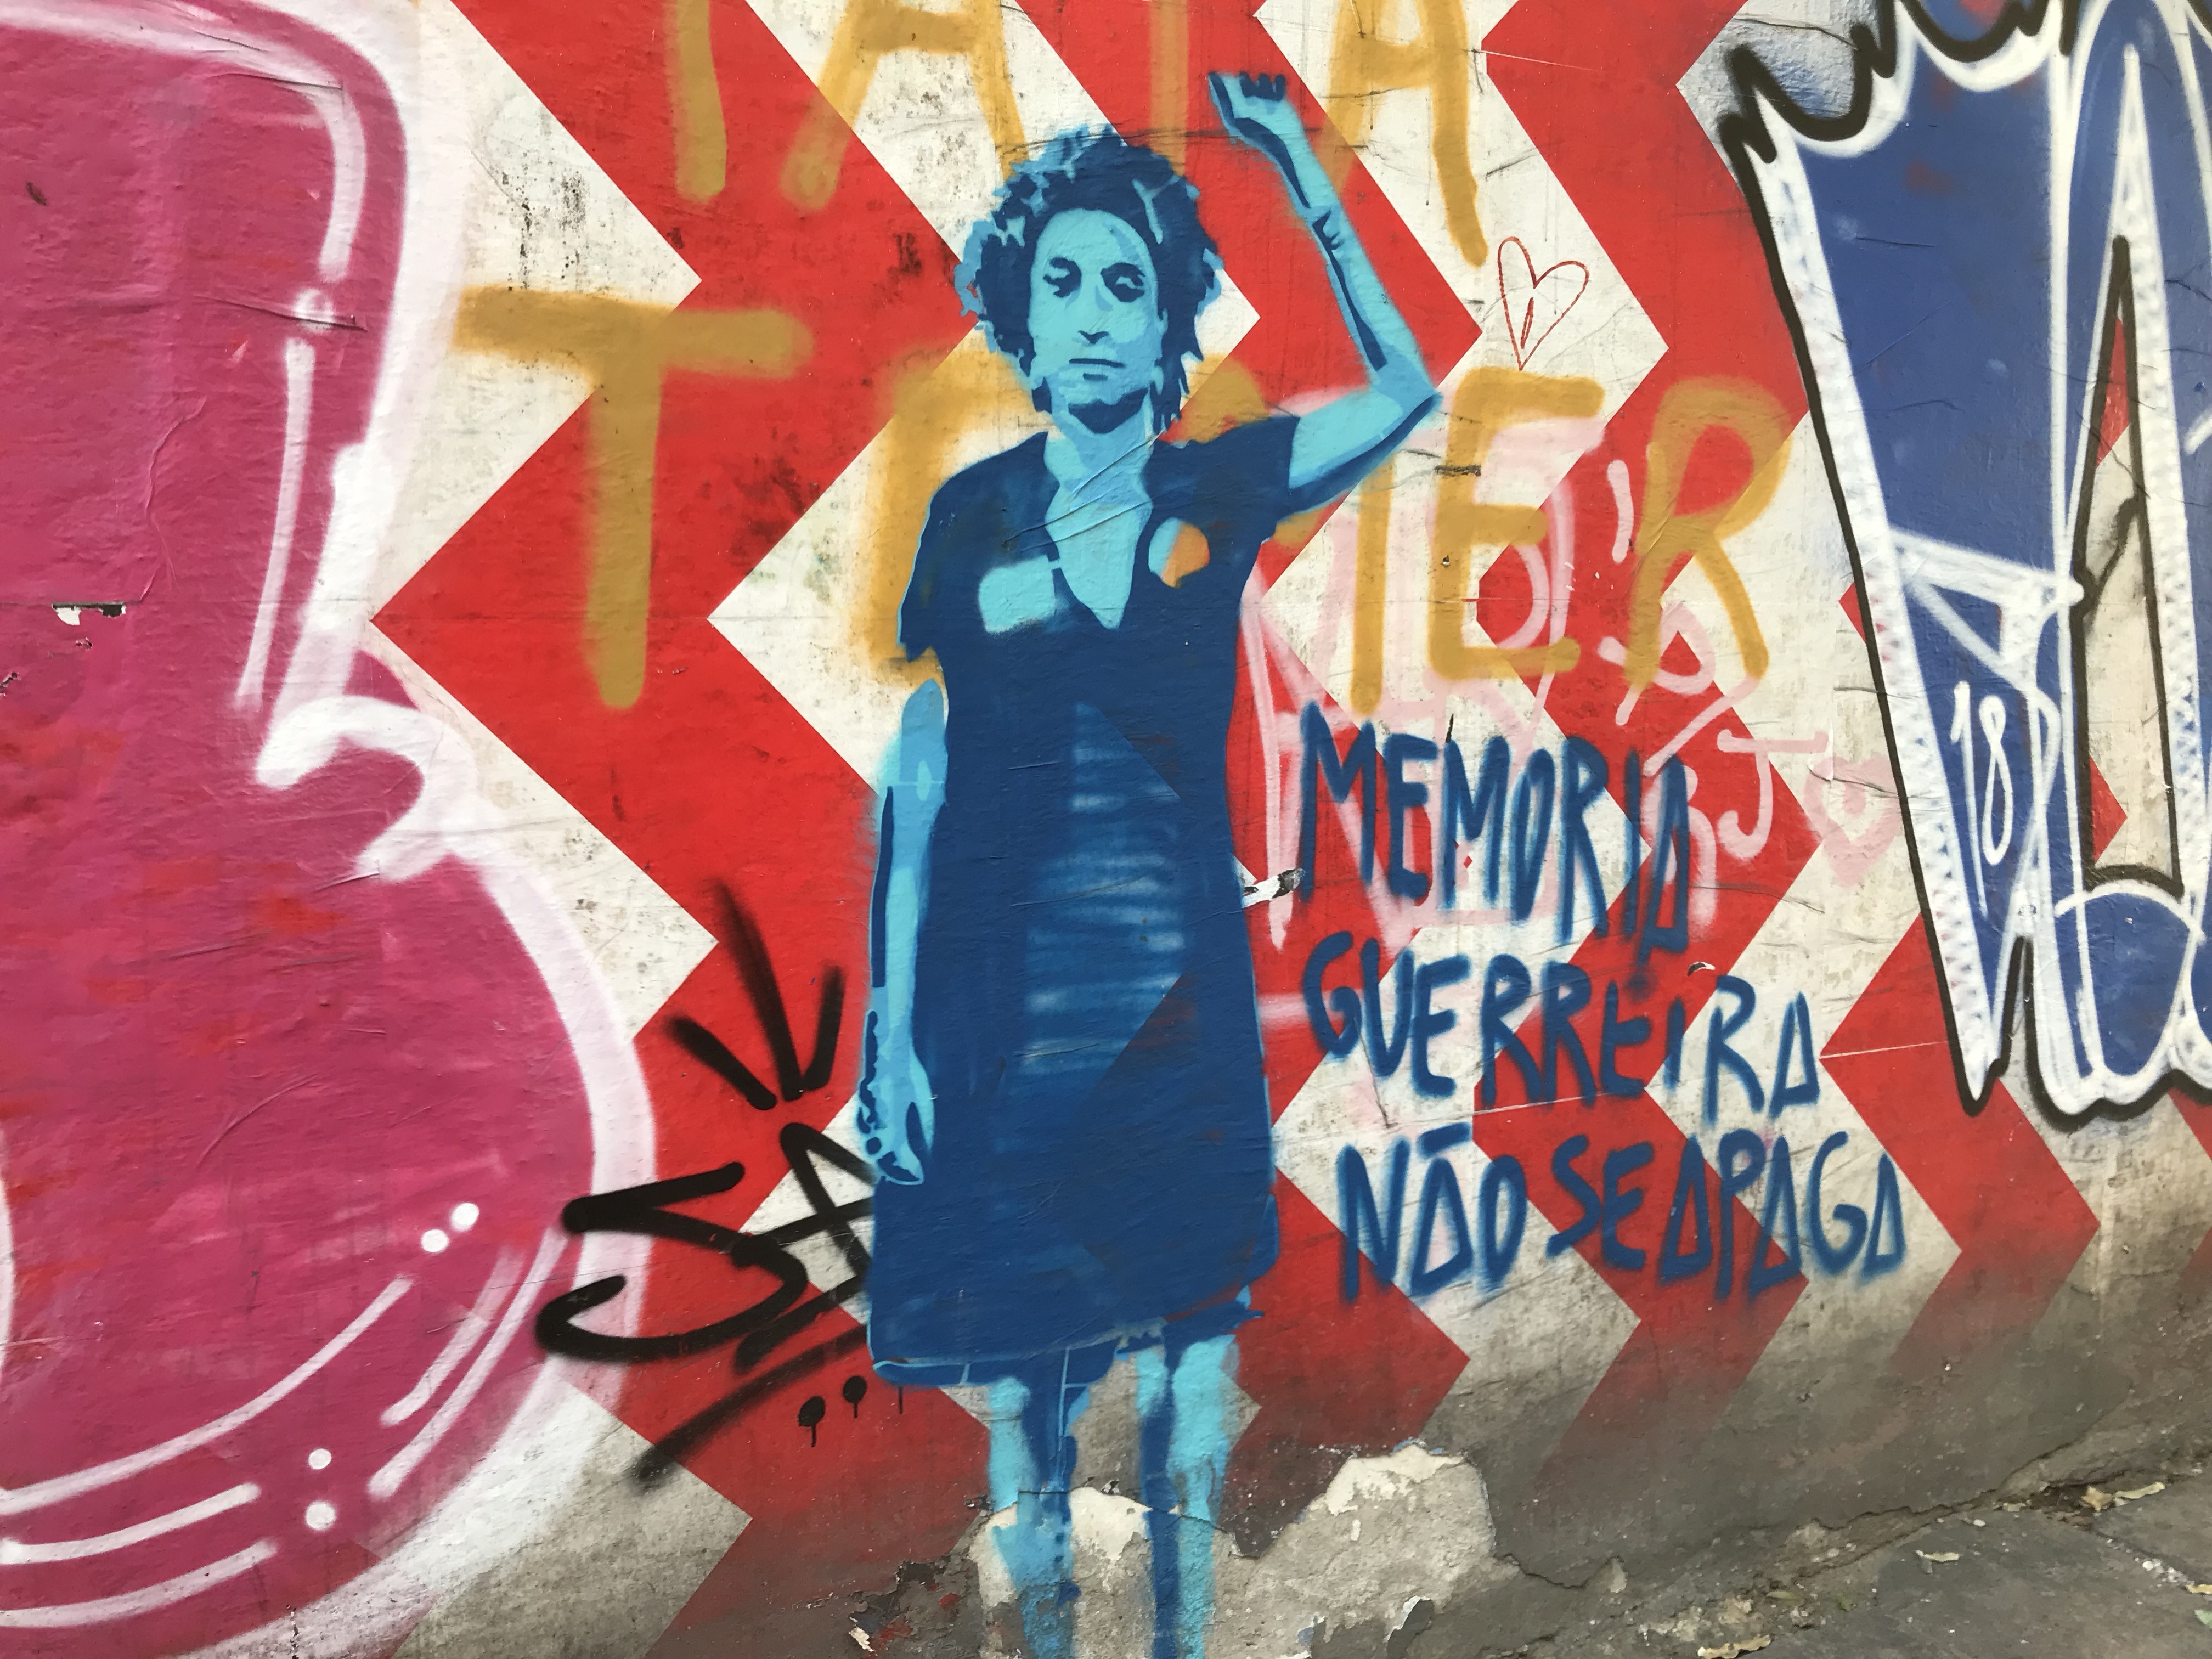 Street art depicting prominent human rights activist, Marielle Franco. Photo by Erika Robb Larkins